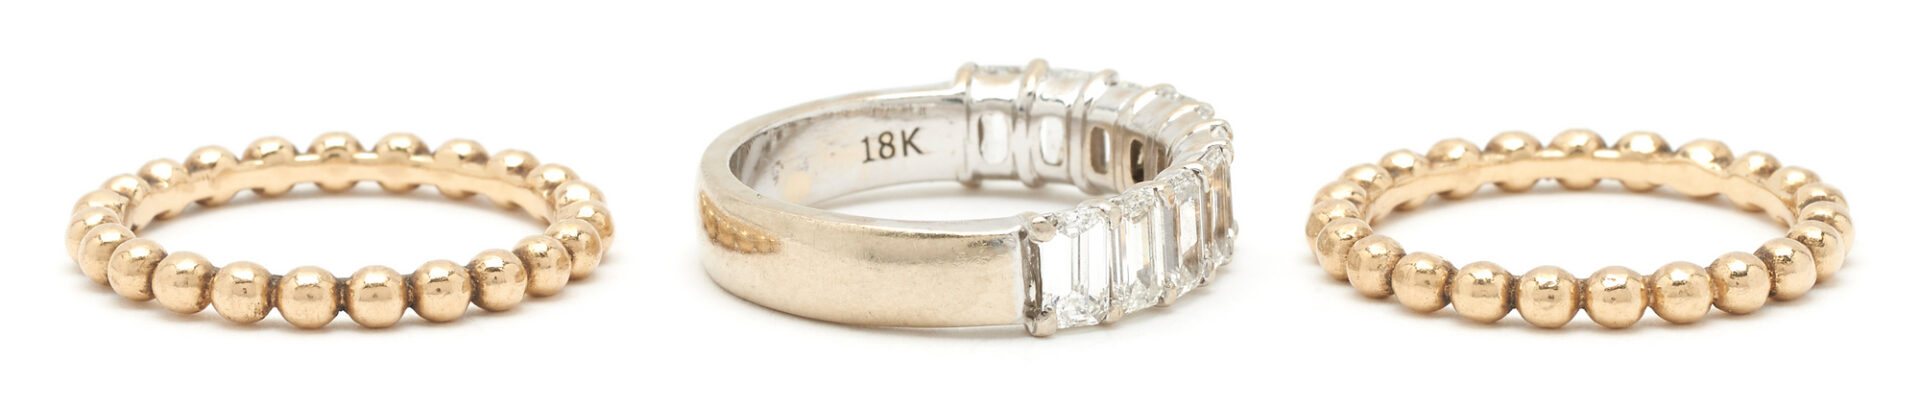 Lot 814: 3 Rings, incl. 18K Diamond Band & Pr. 14K Gold Bands